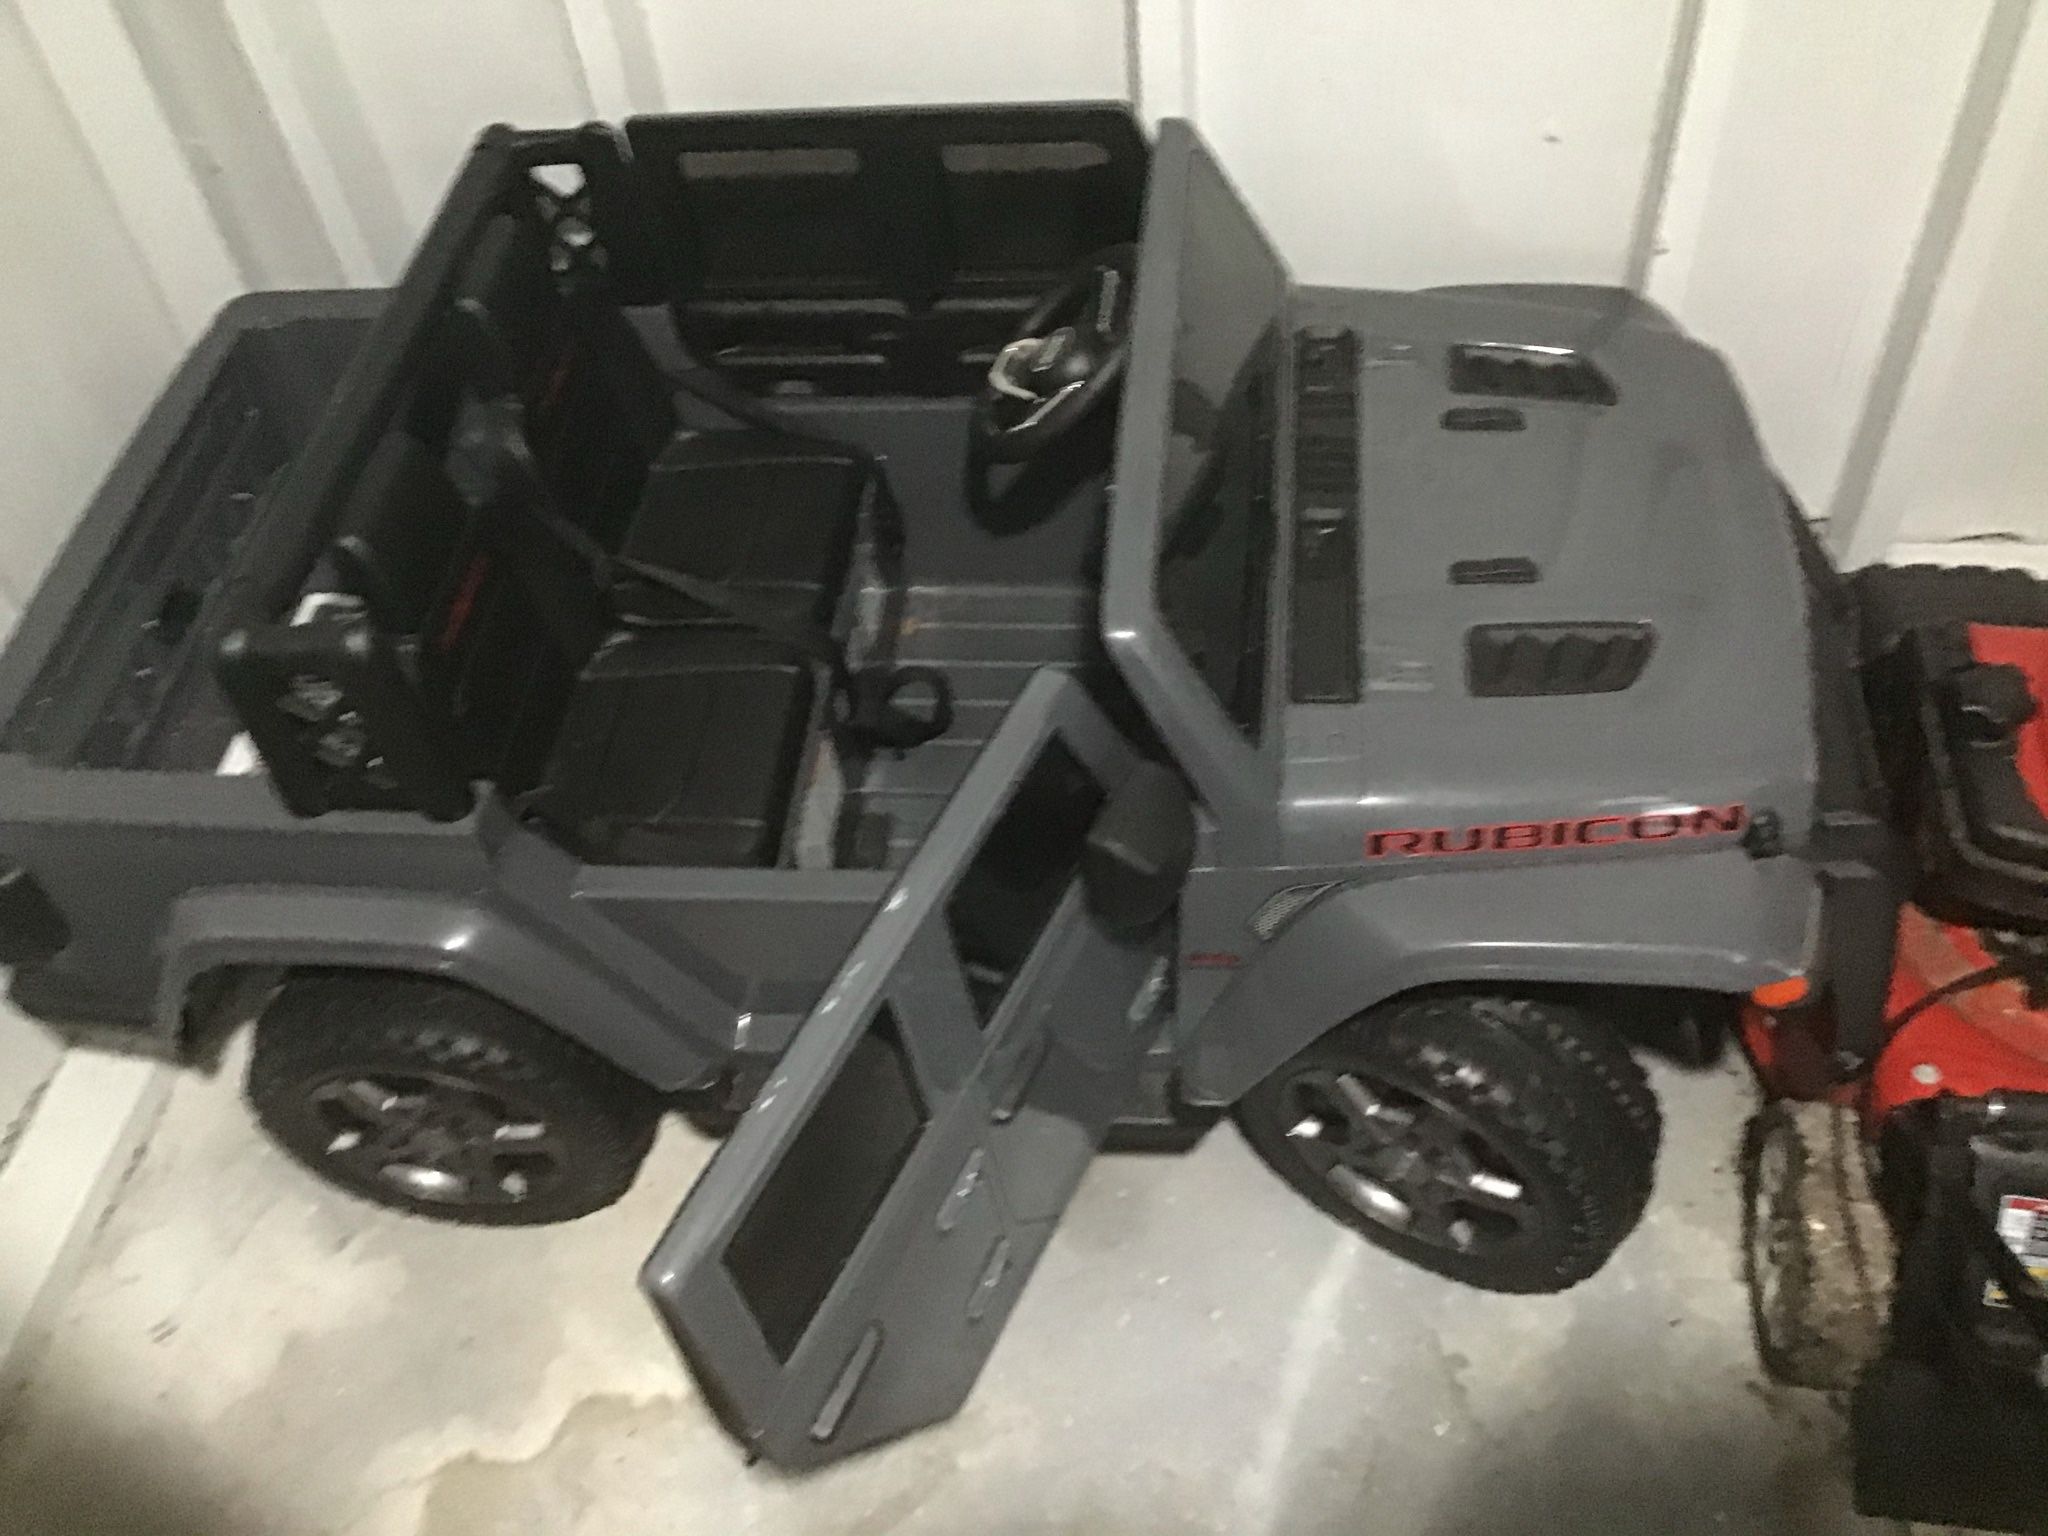 Jeep Toy Car